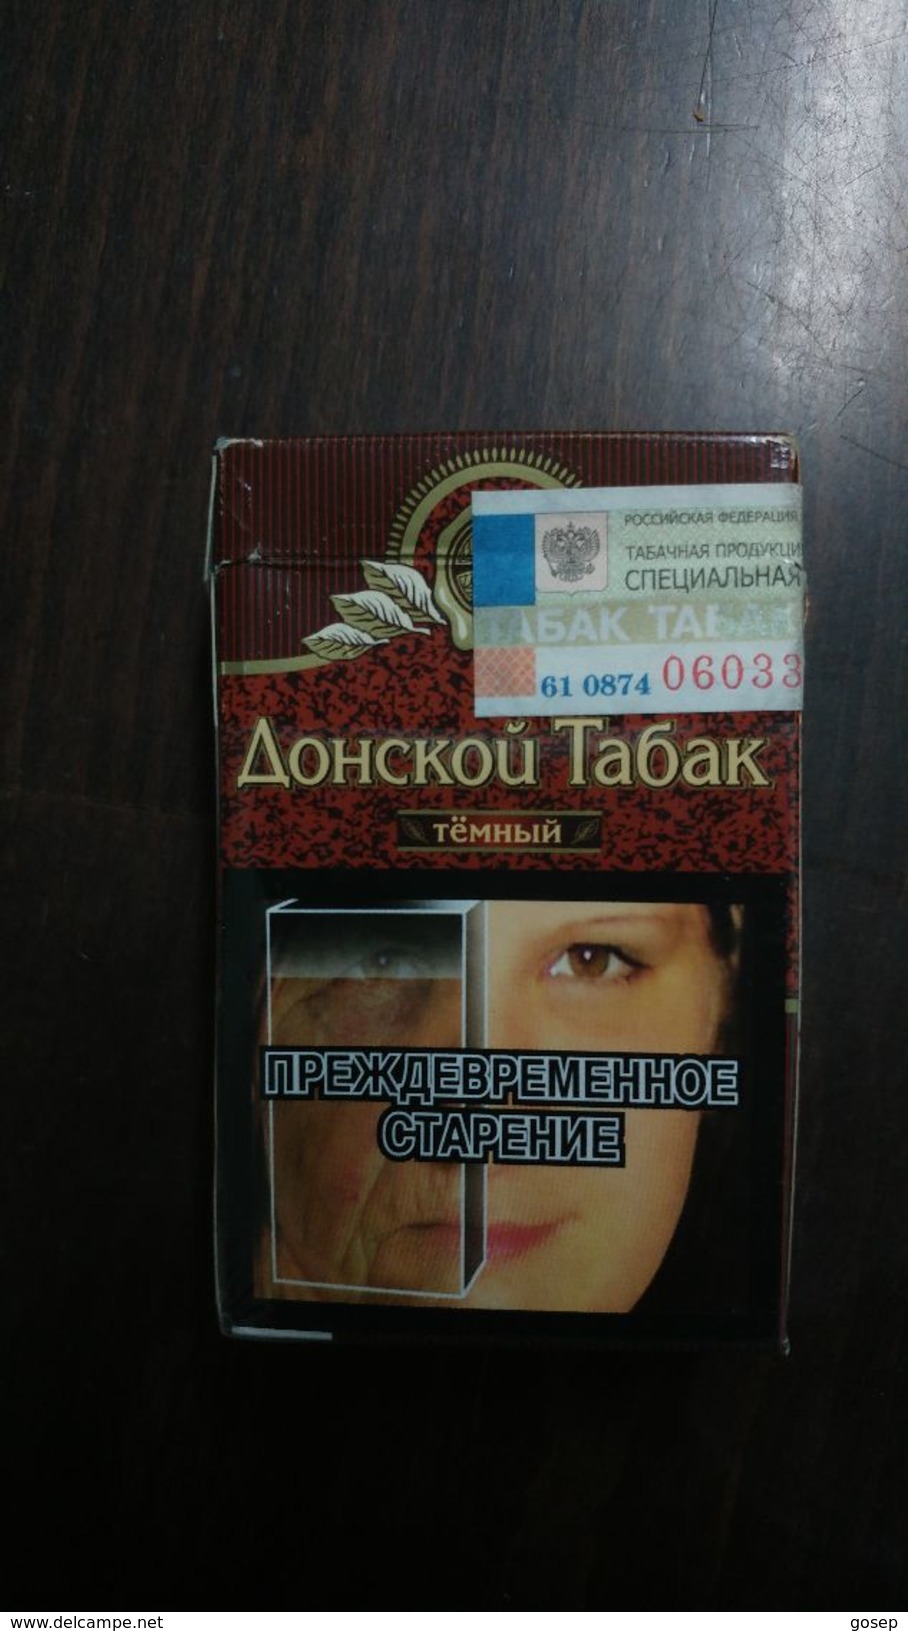 Russia-box Empty Cigarette-aohckou Tabak-(1) - Etuis à Cigarettes Vides